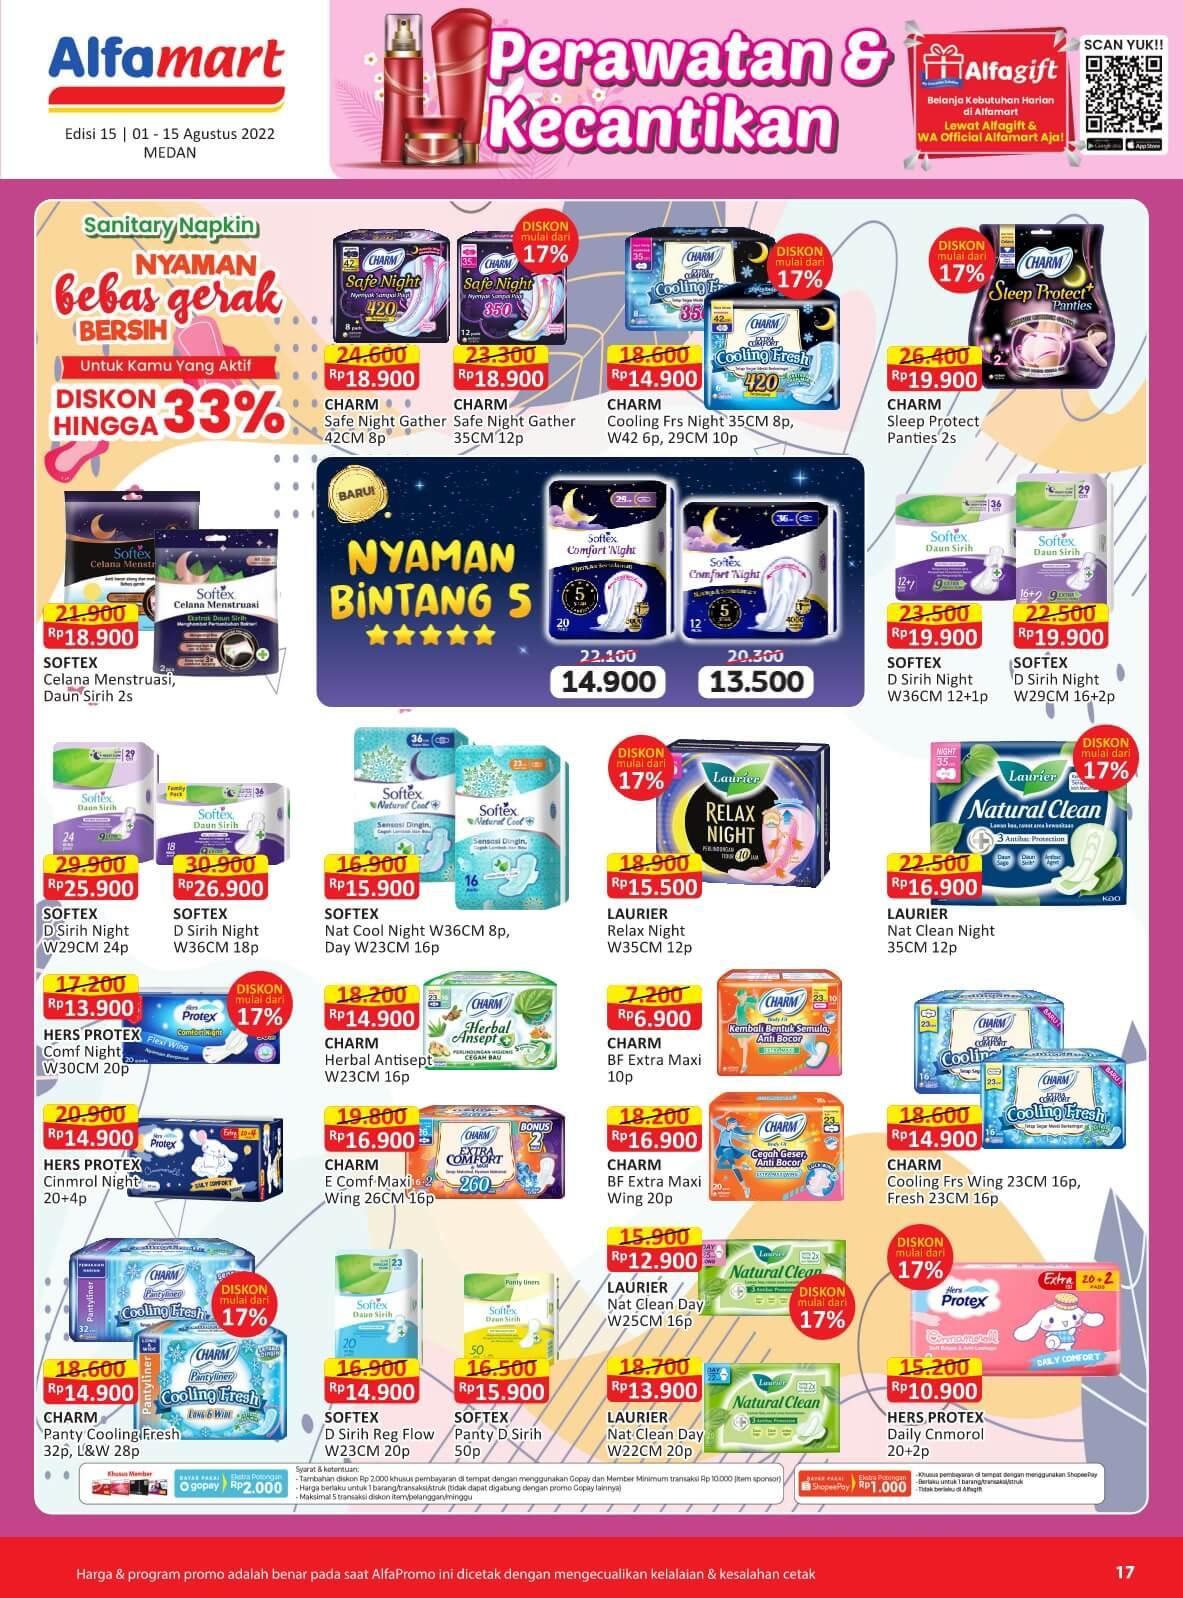 Image E-Catalogue Alfamart 16